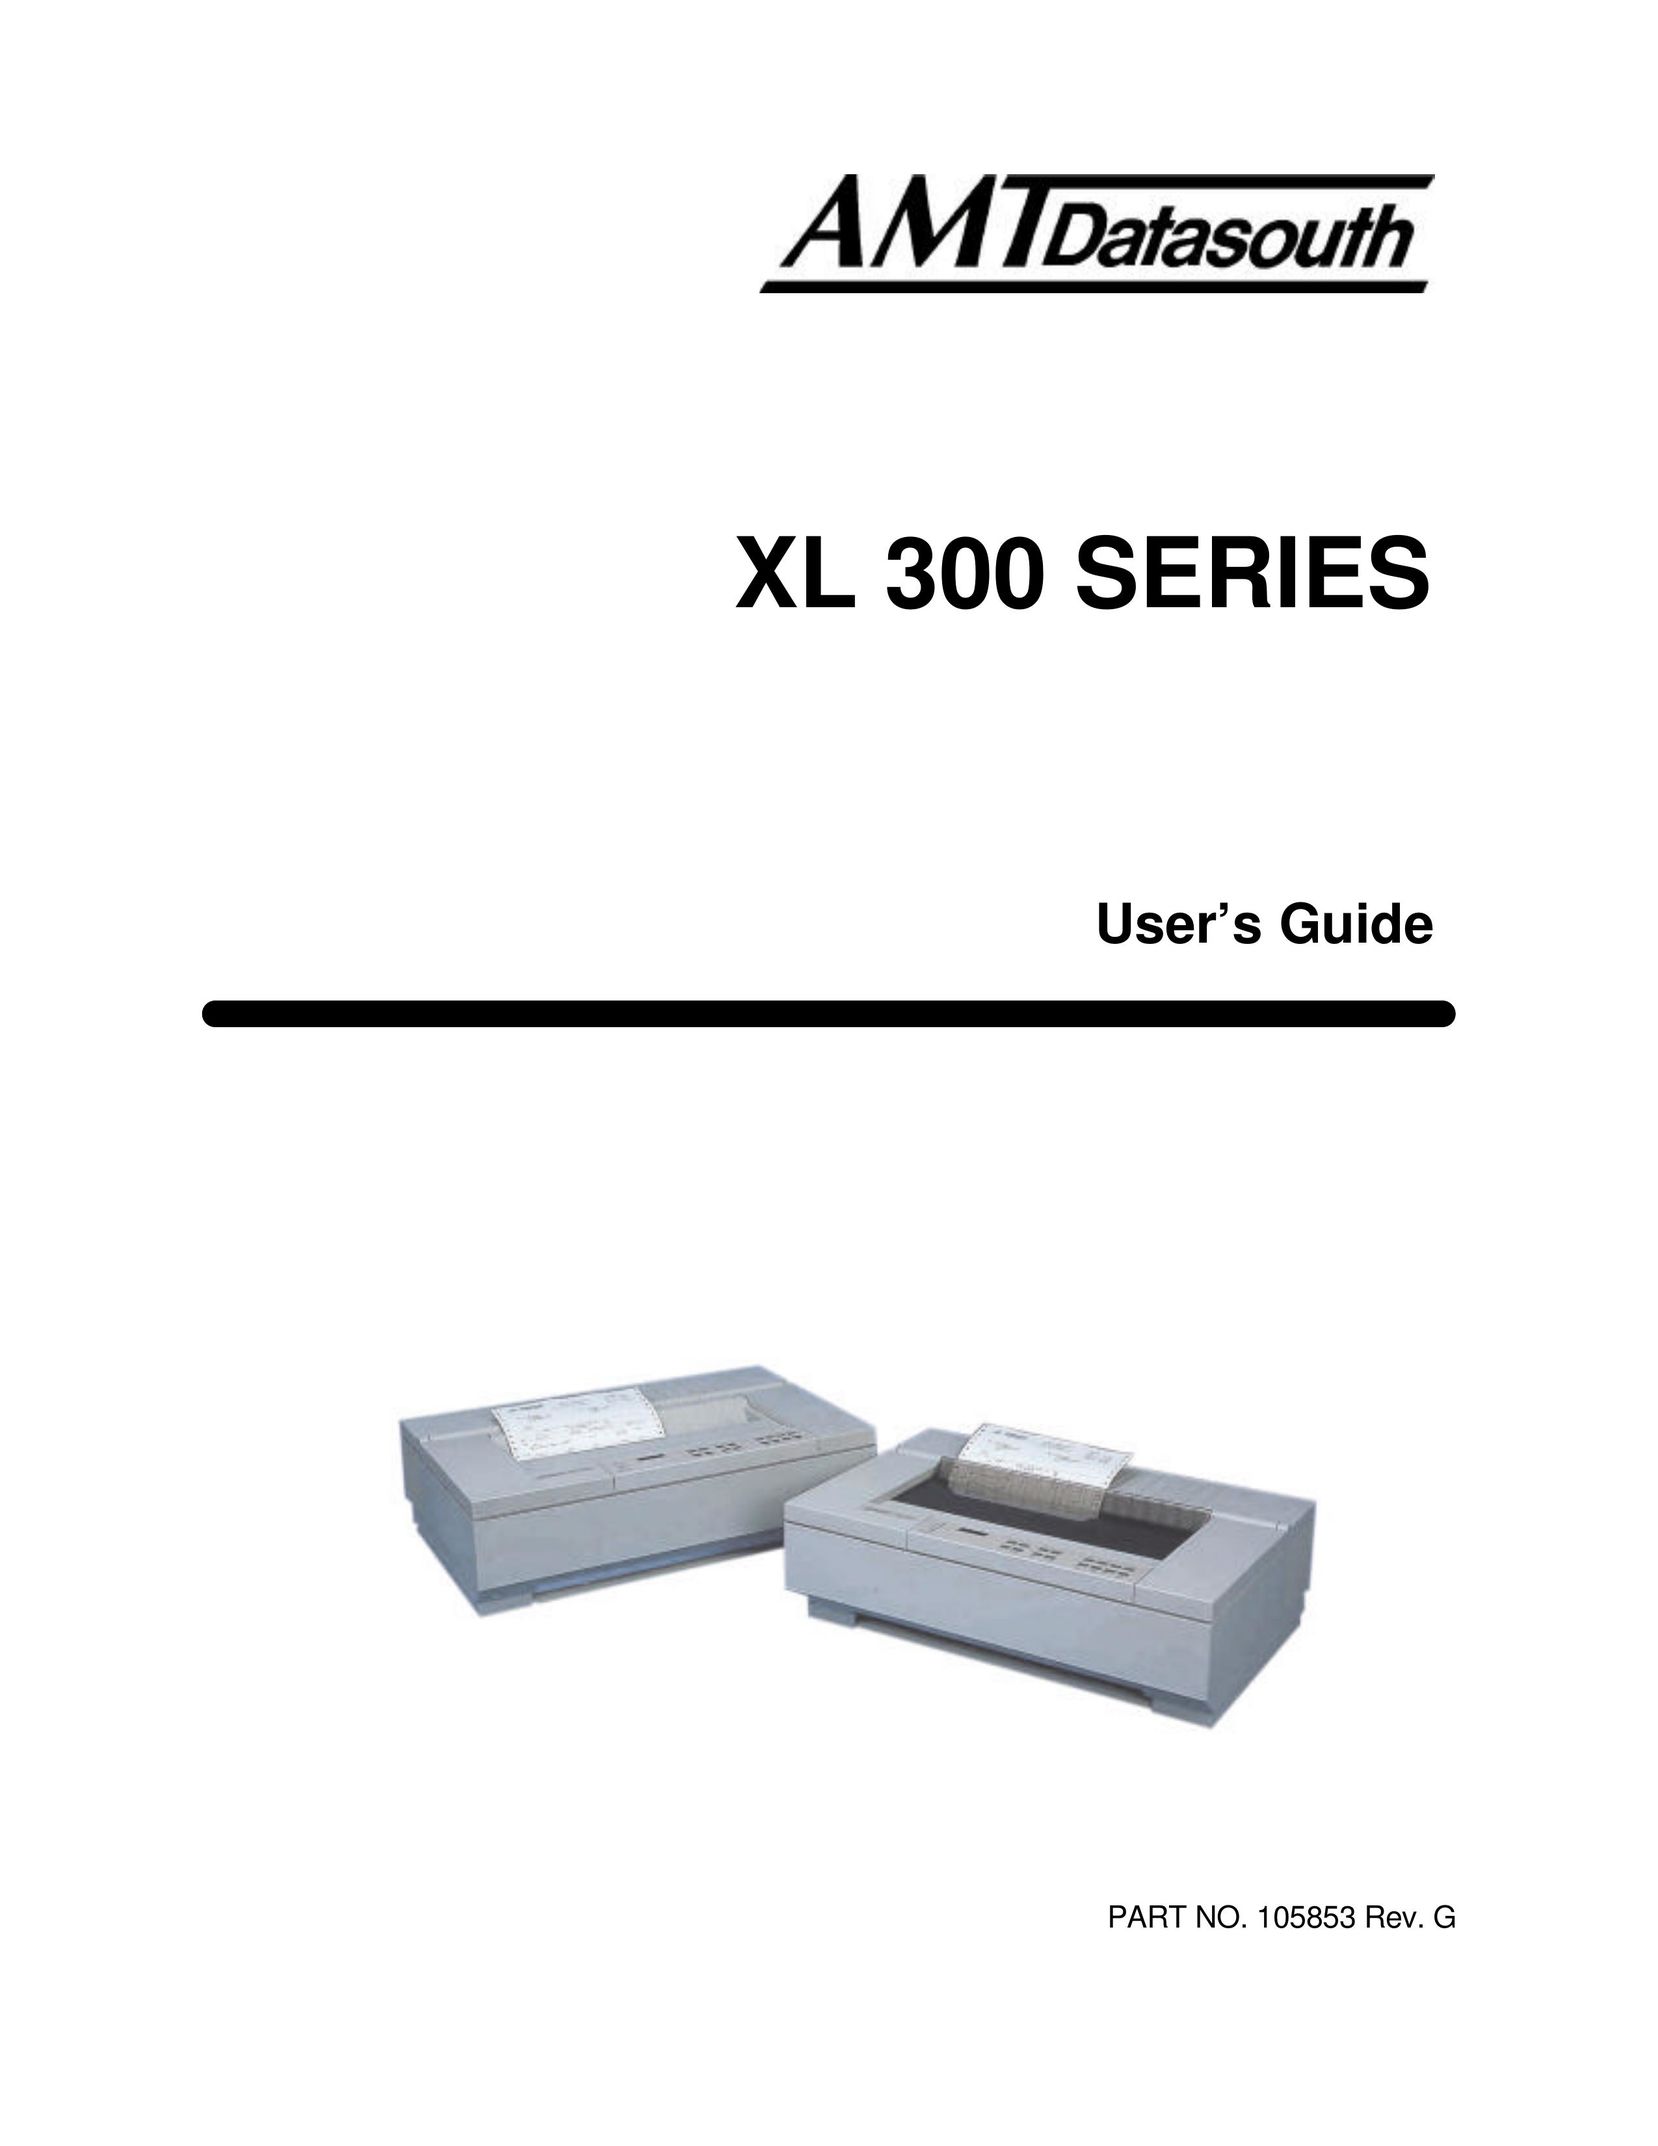 AMT Datasouth XL300 Printer User Manual